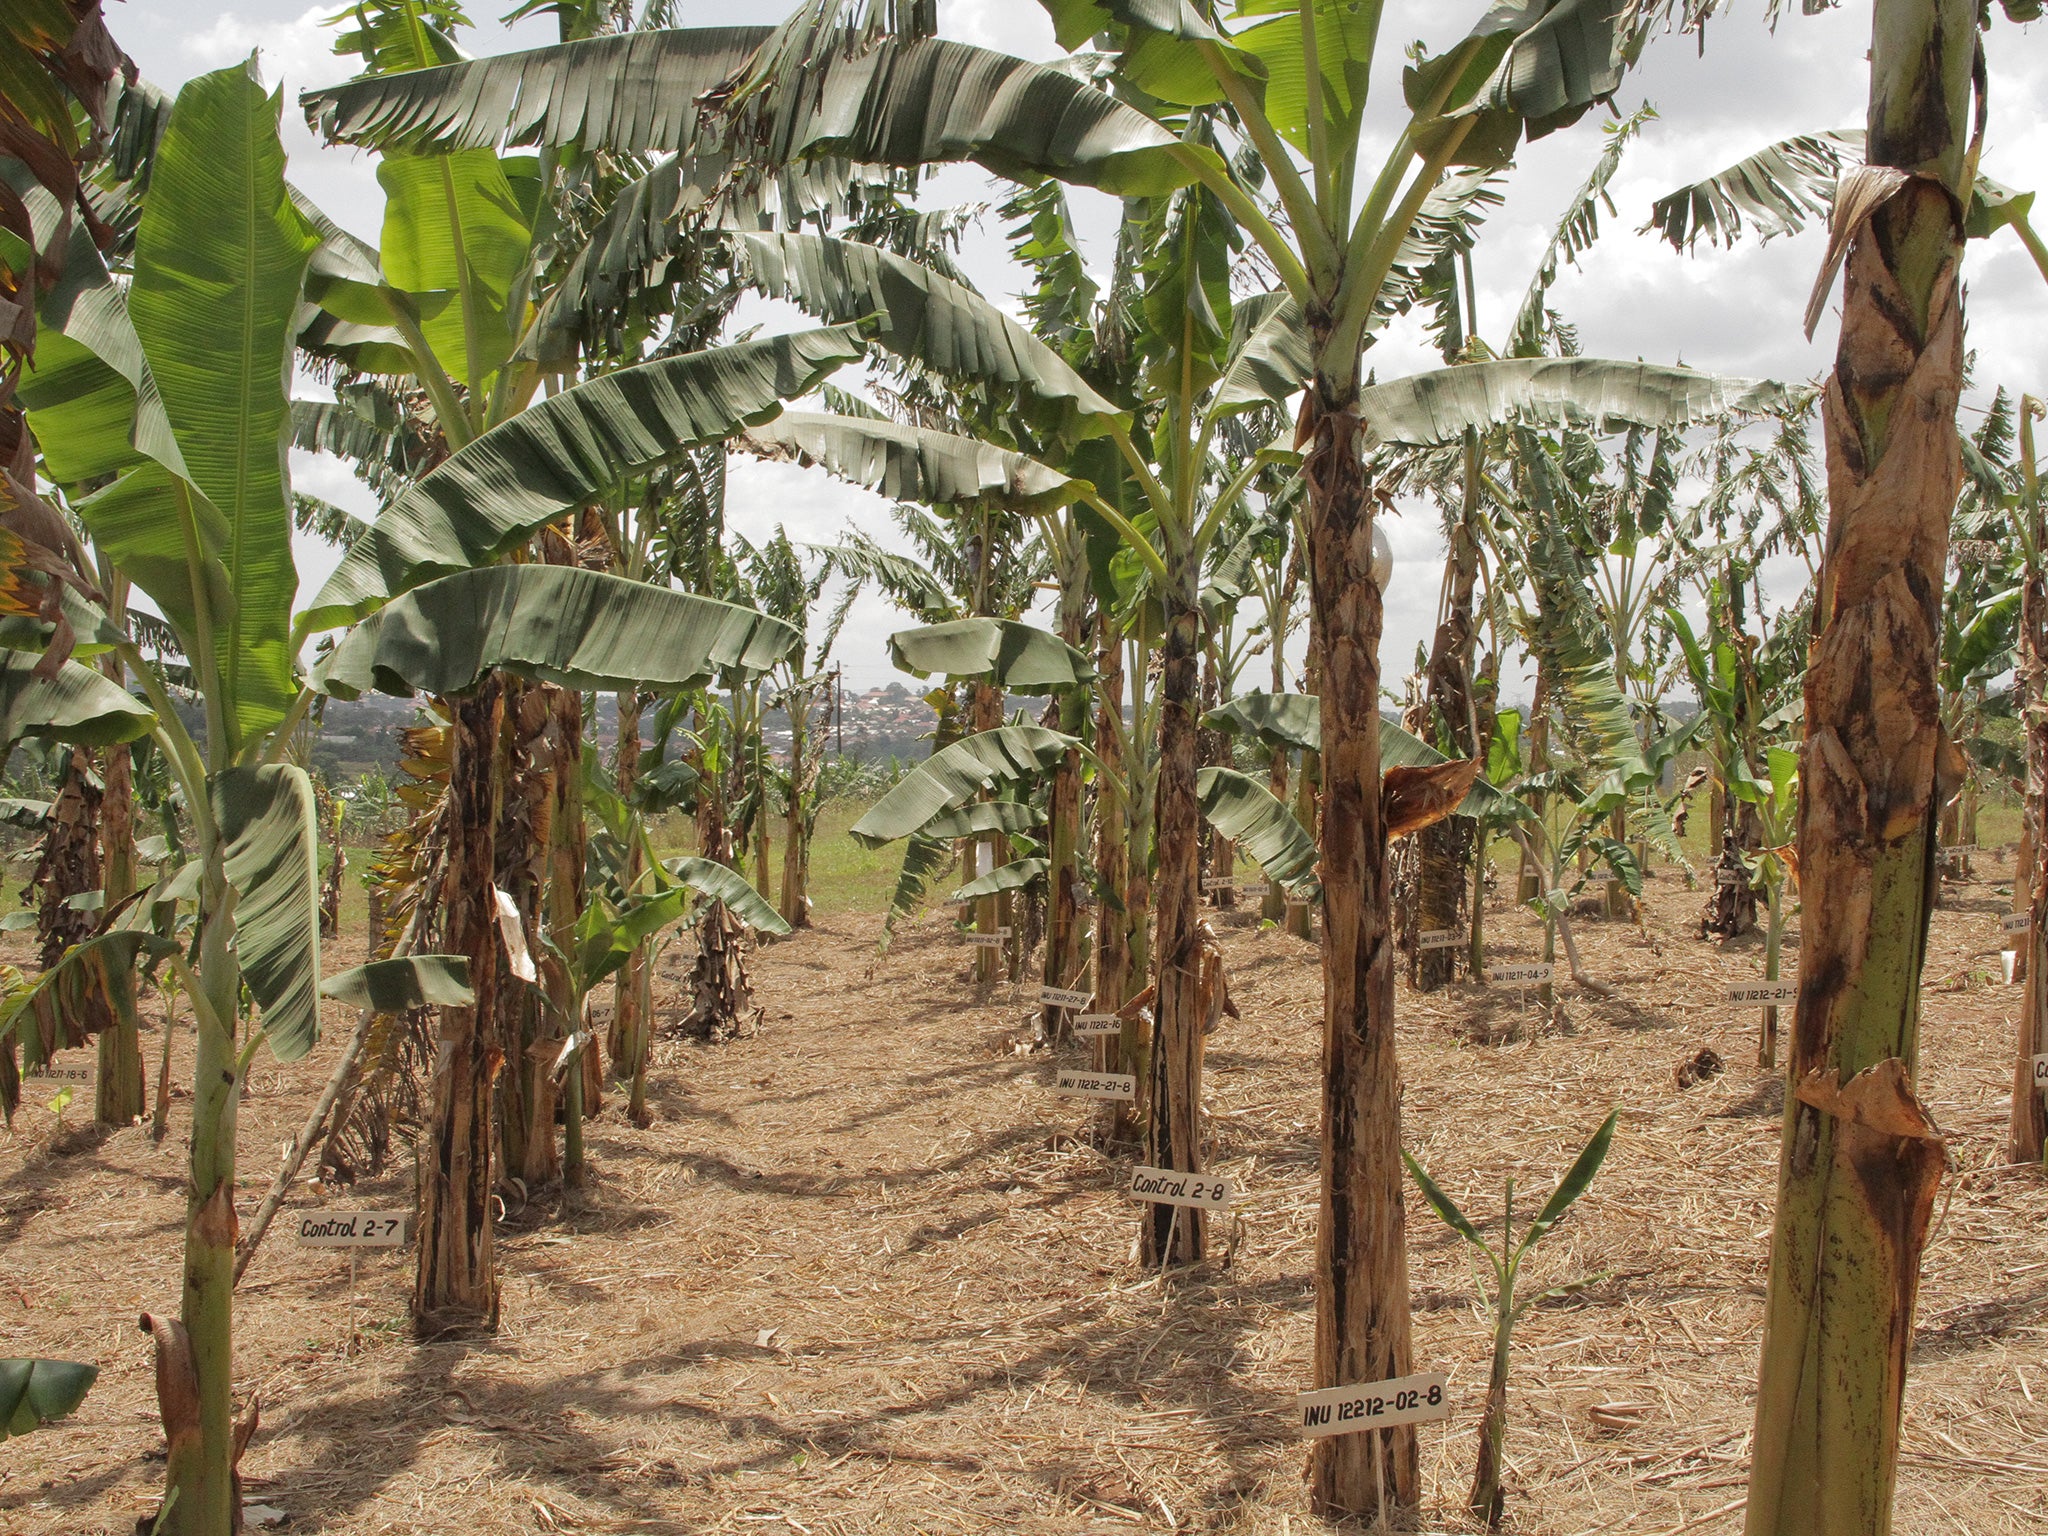 The Ugandan GM Banana Plantation